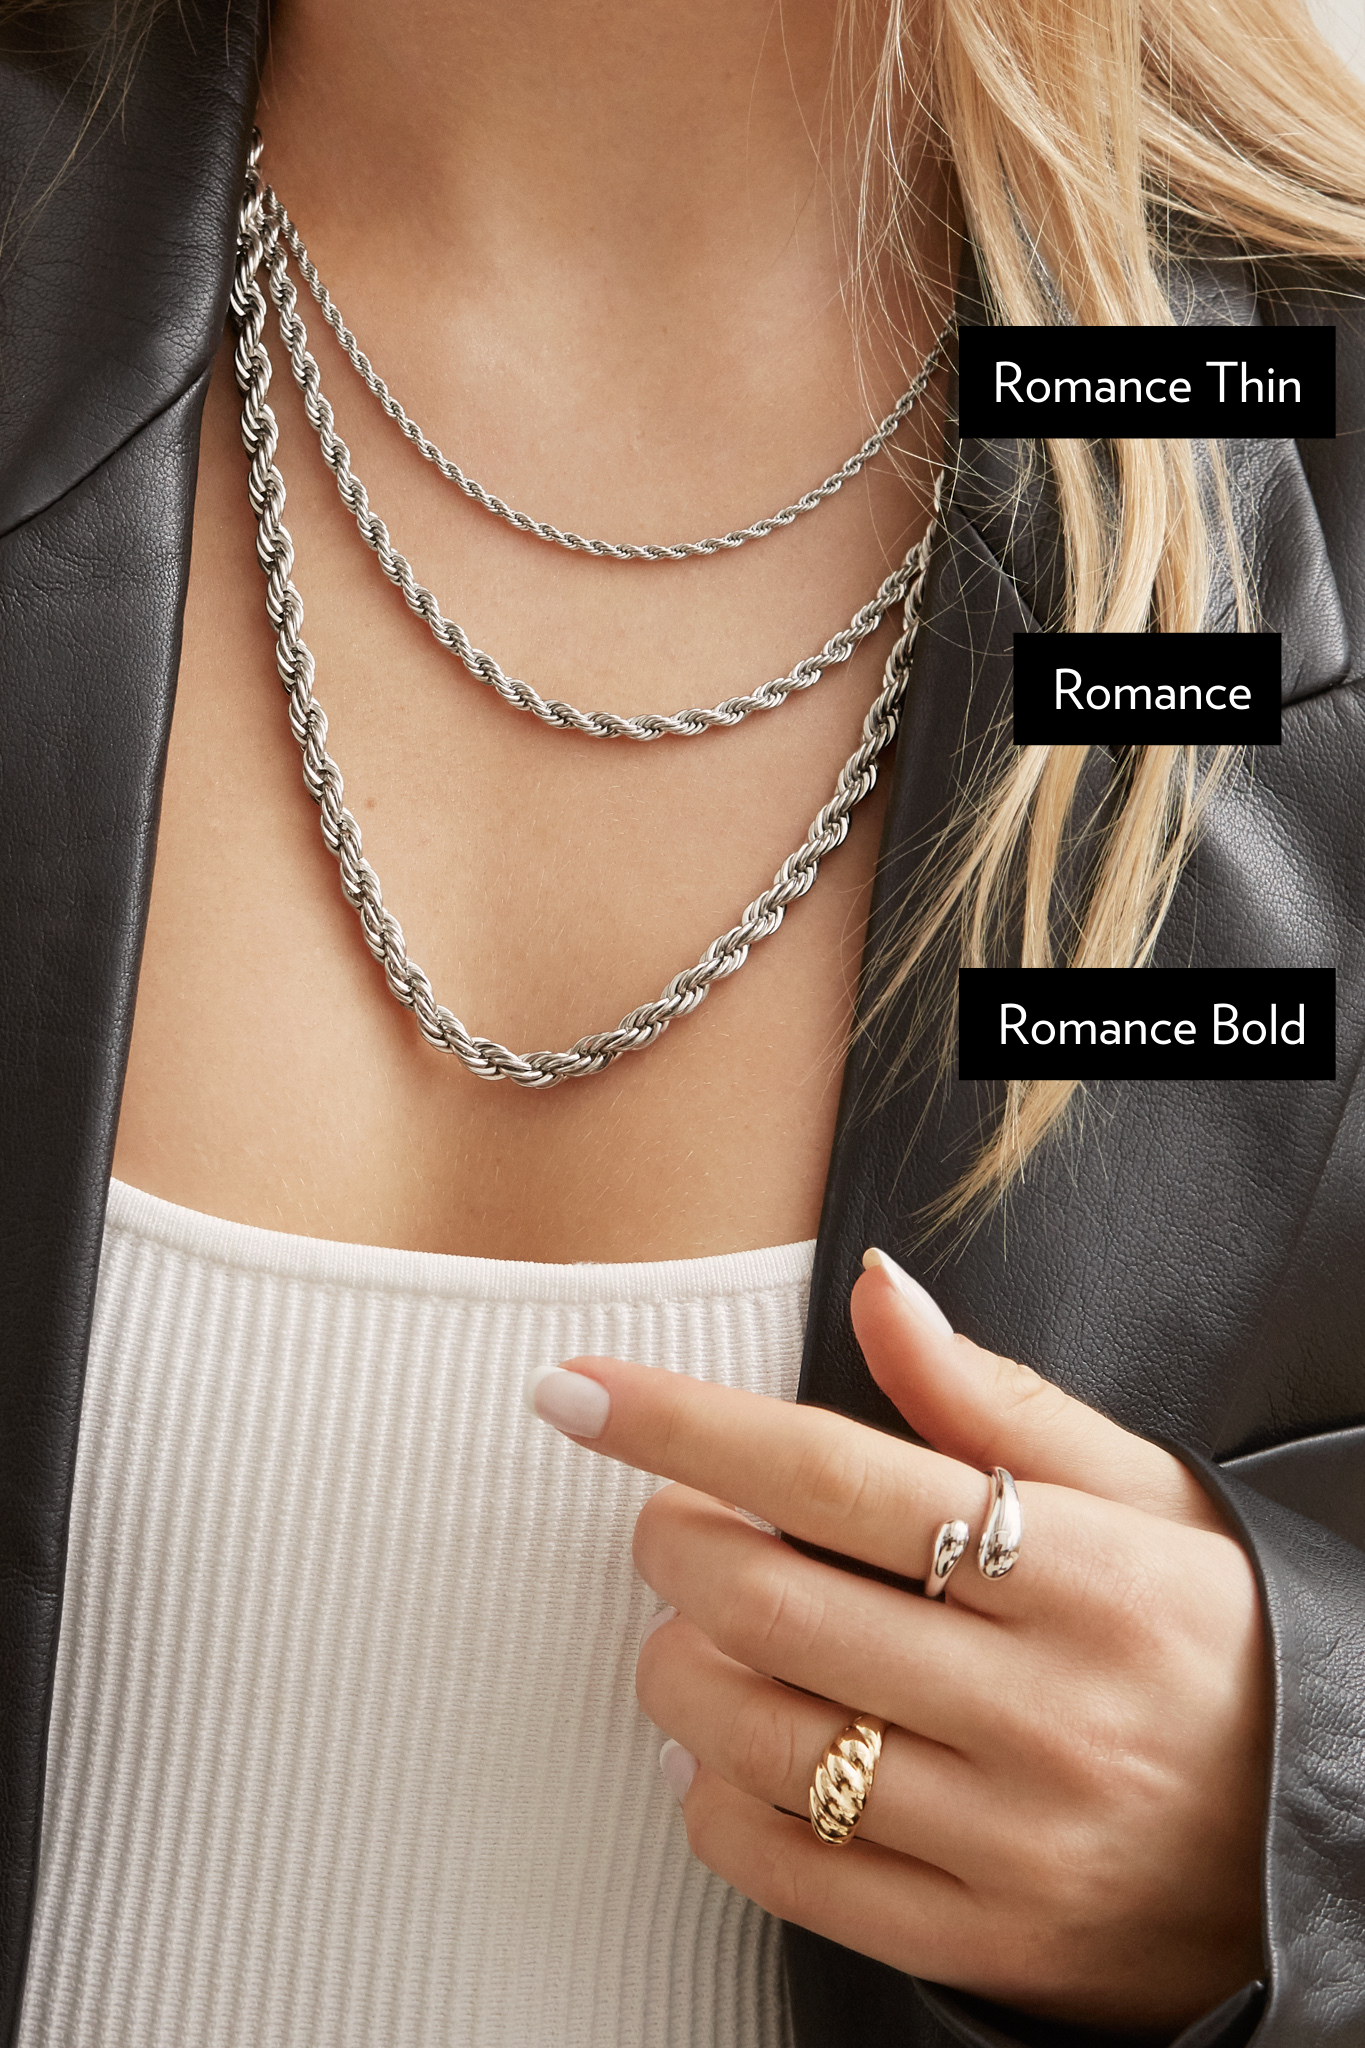 Romance Necklace - Gold Romance Necklace - Gold